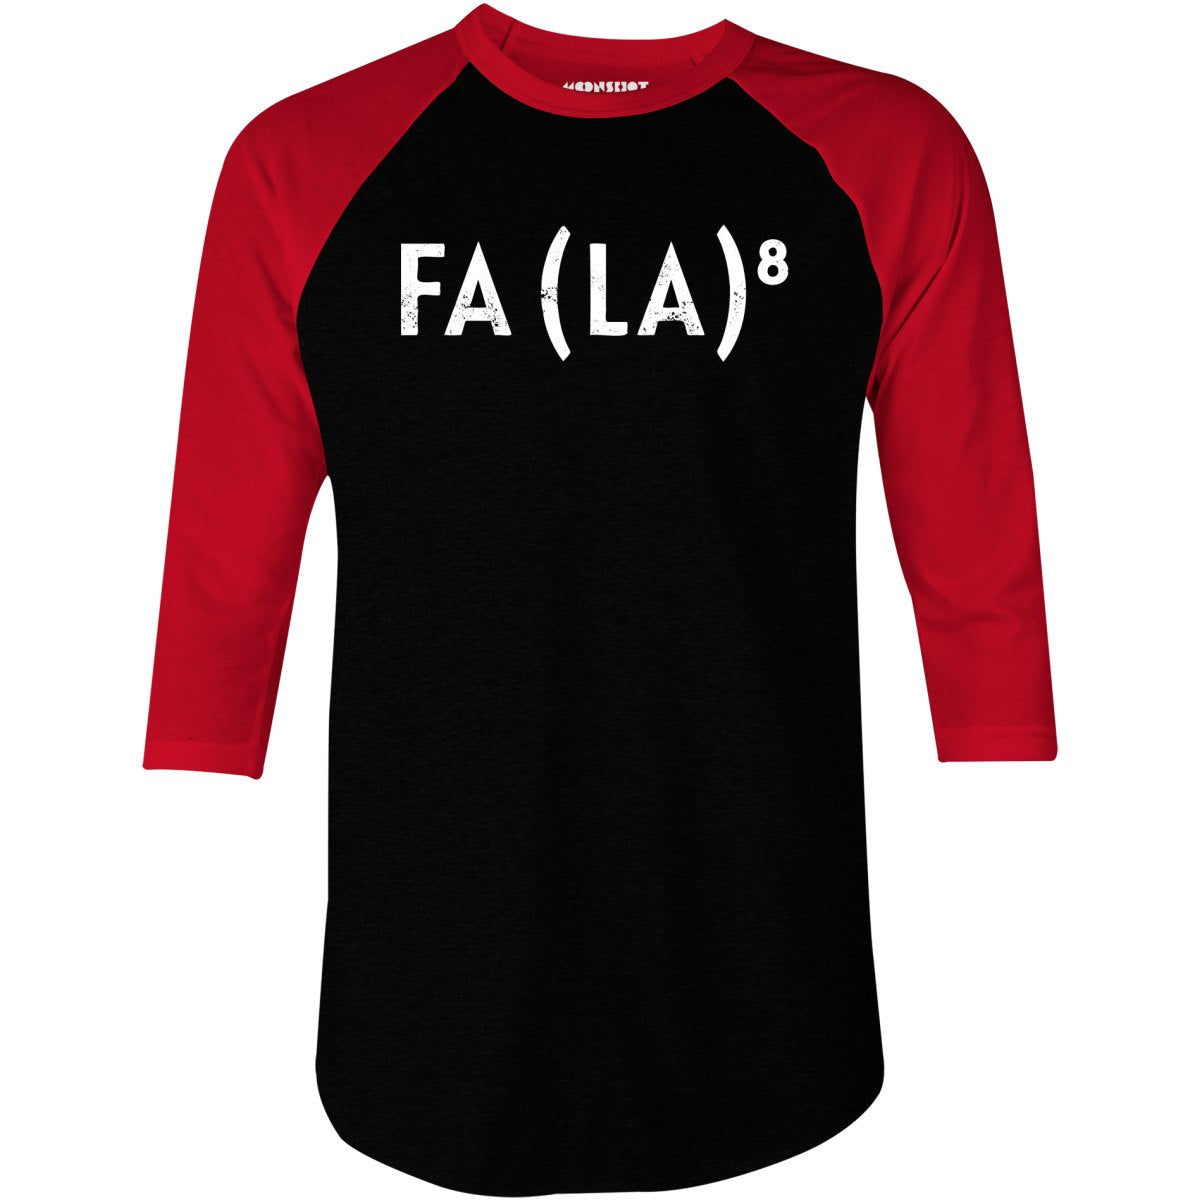 Fa La to the 8th - 3/4 Sleeve Raglan T-Shirt